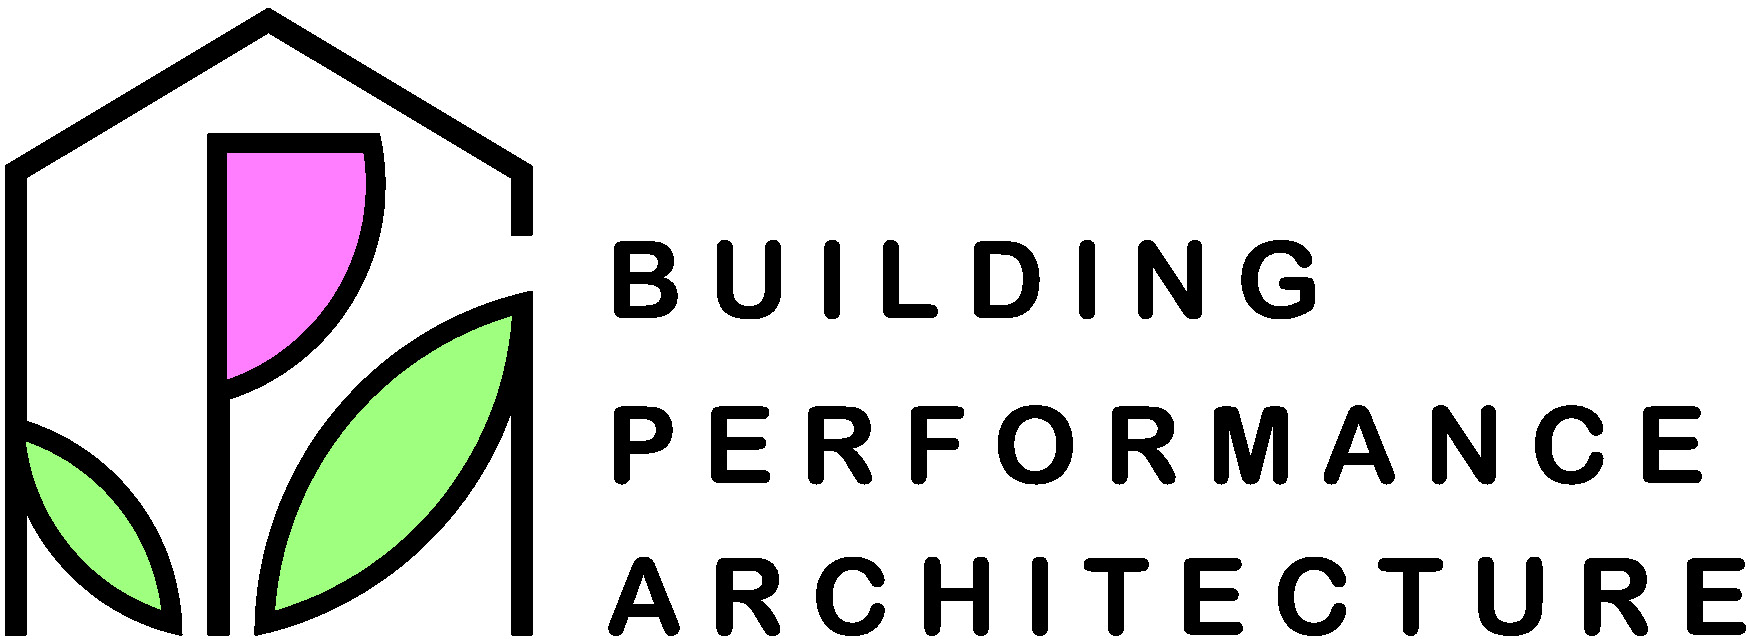 Building Performance Architecture company logo